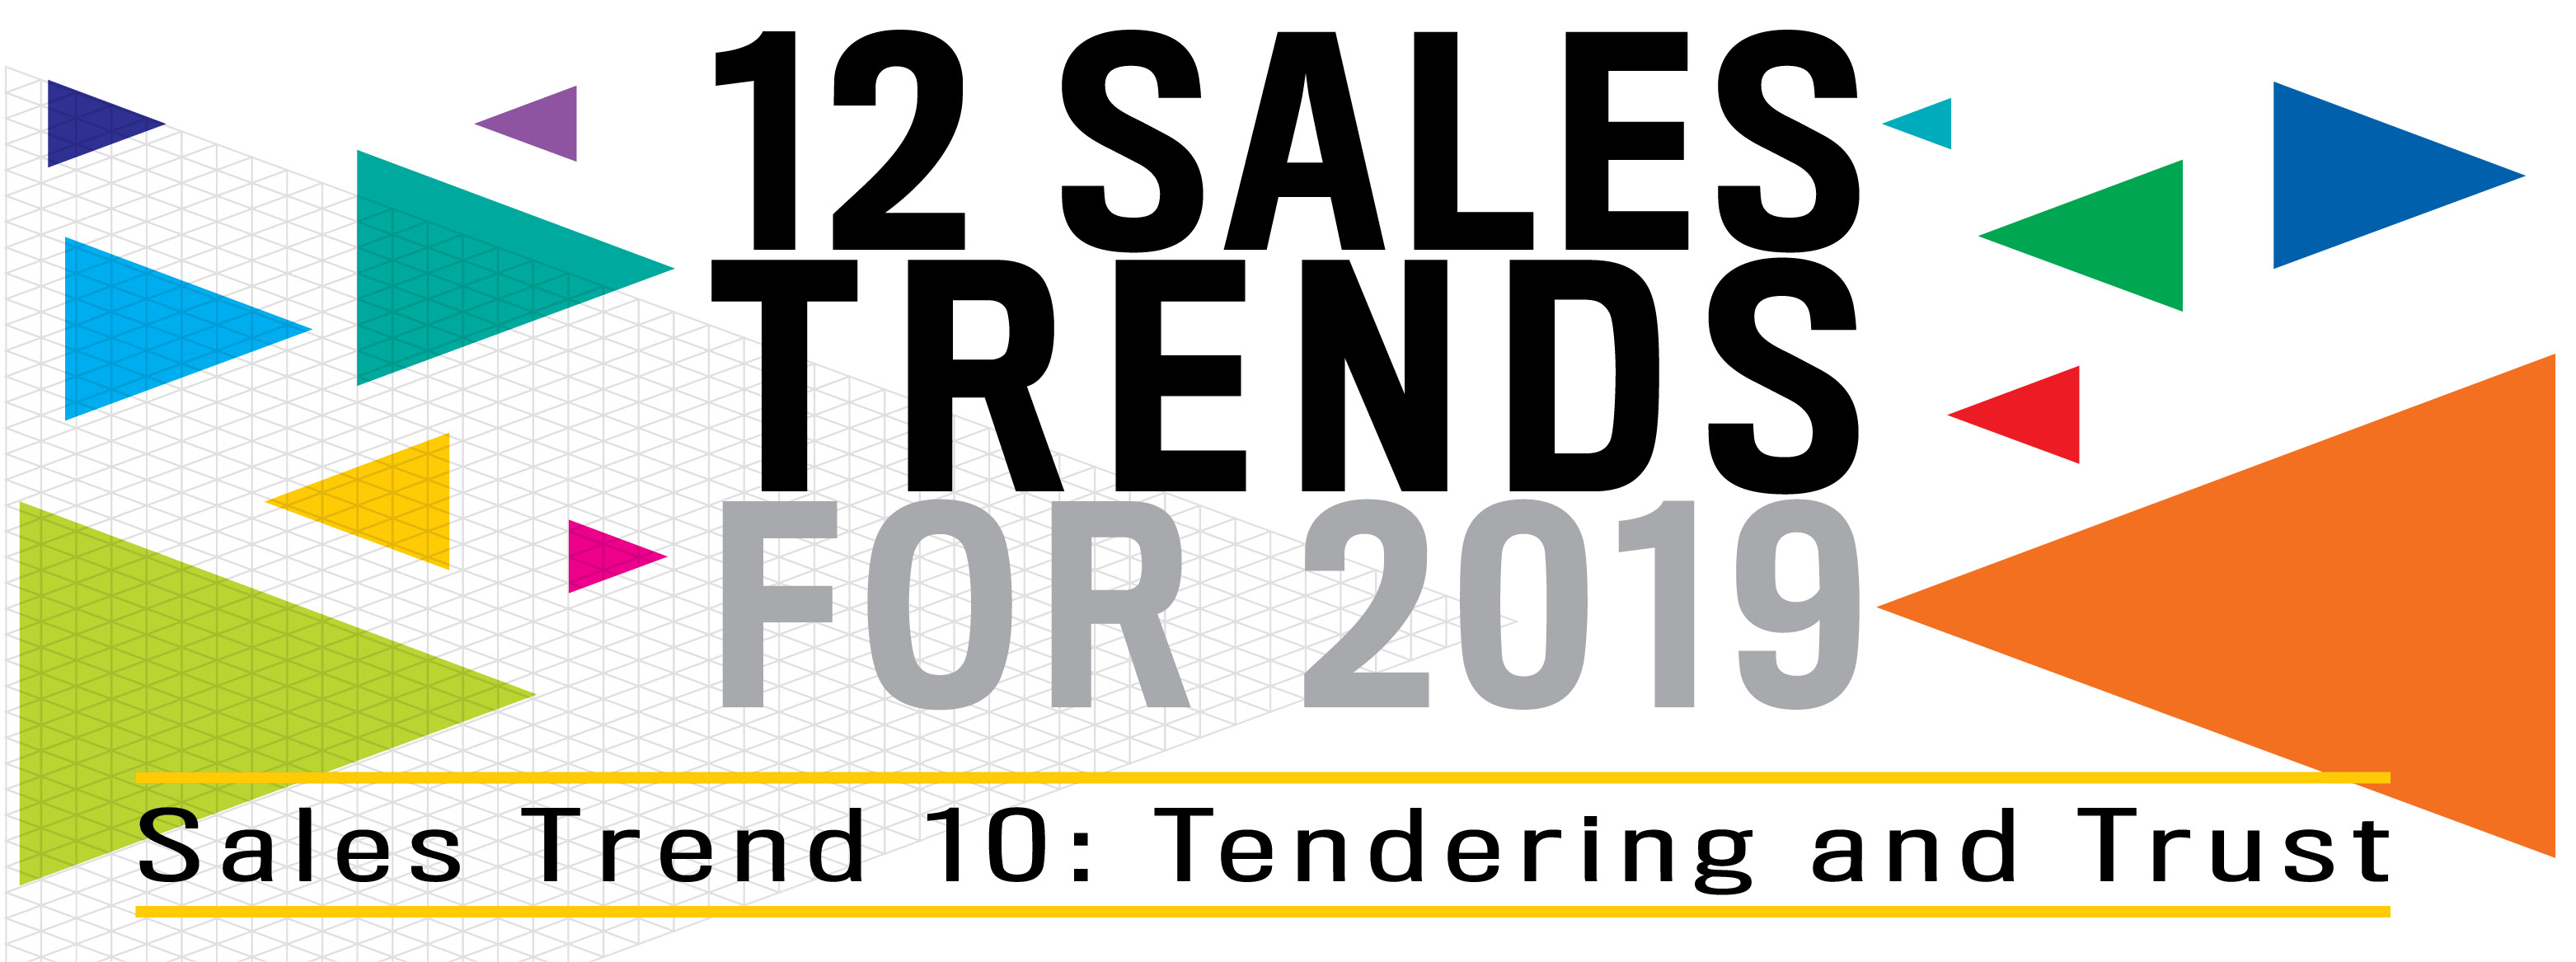 barrett_sales_trends_2019_trend_10_tendering_and_trust